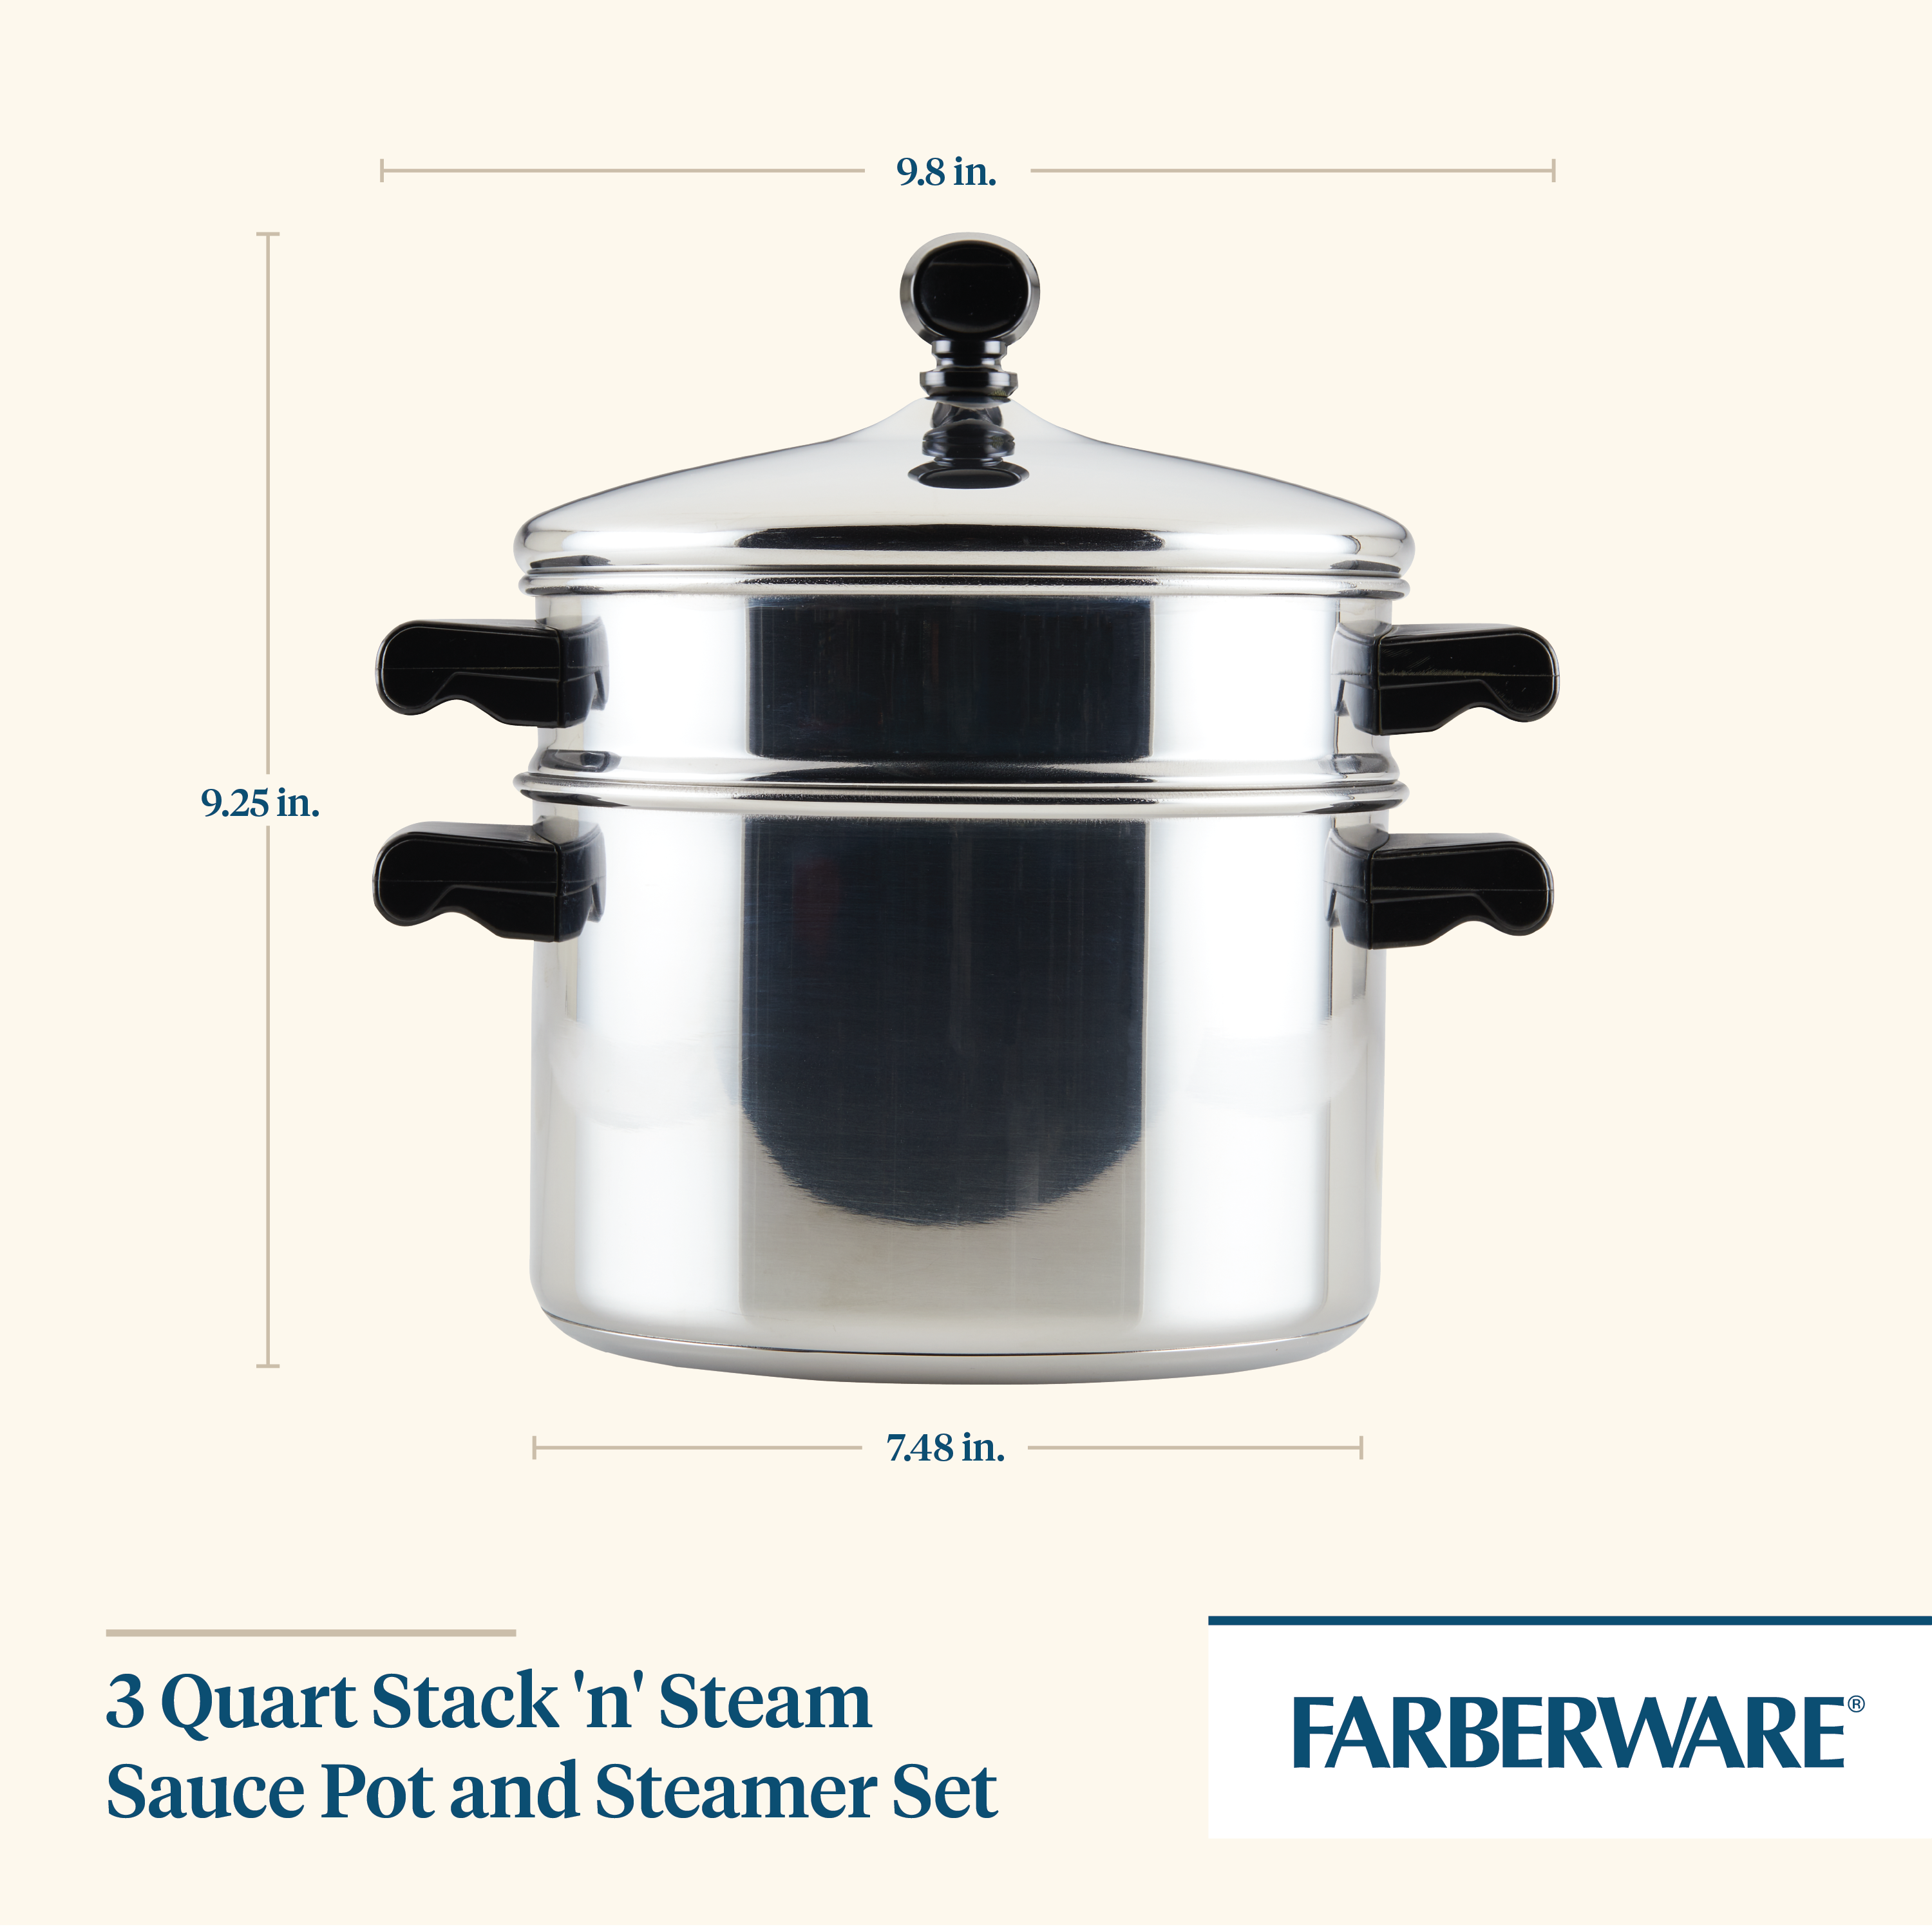 Saladmaster Stainless 8 Saucepan Steamer Insert with Handle - 3 Quart